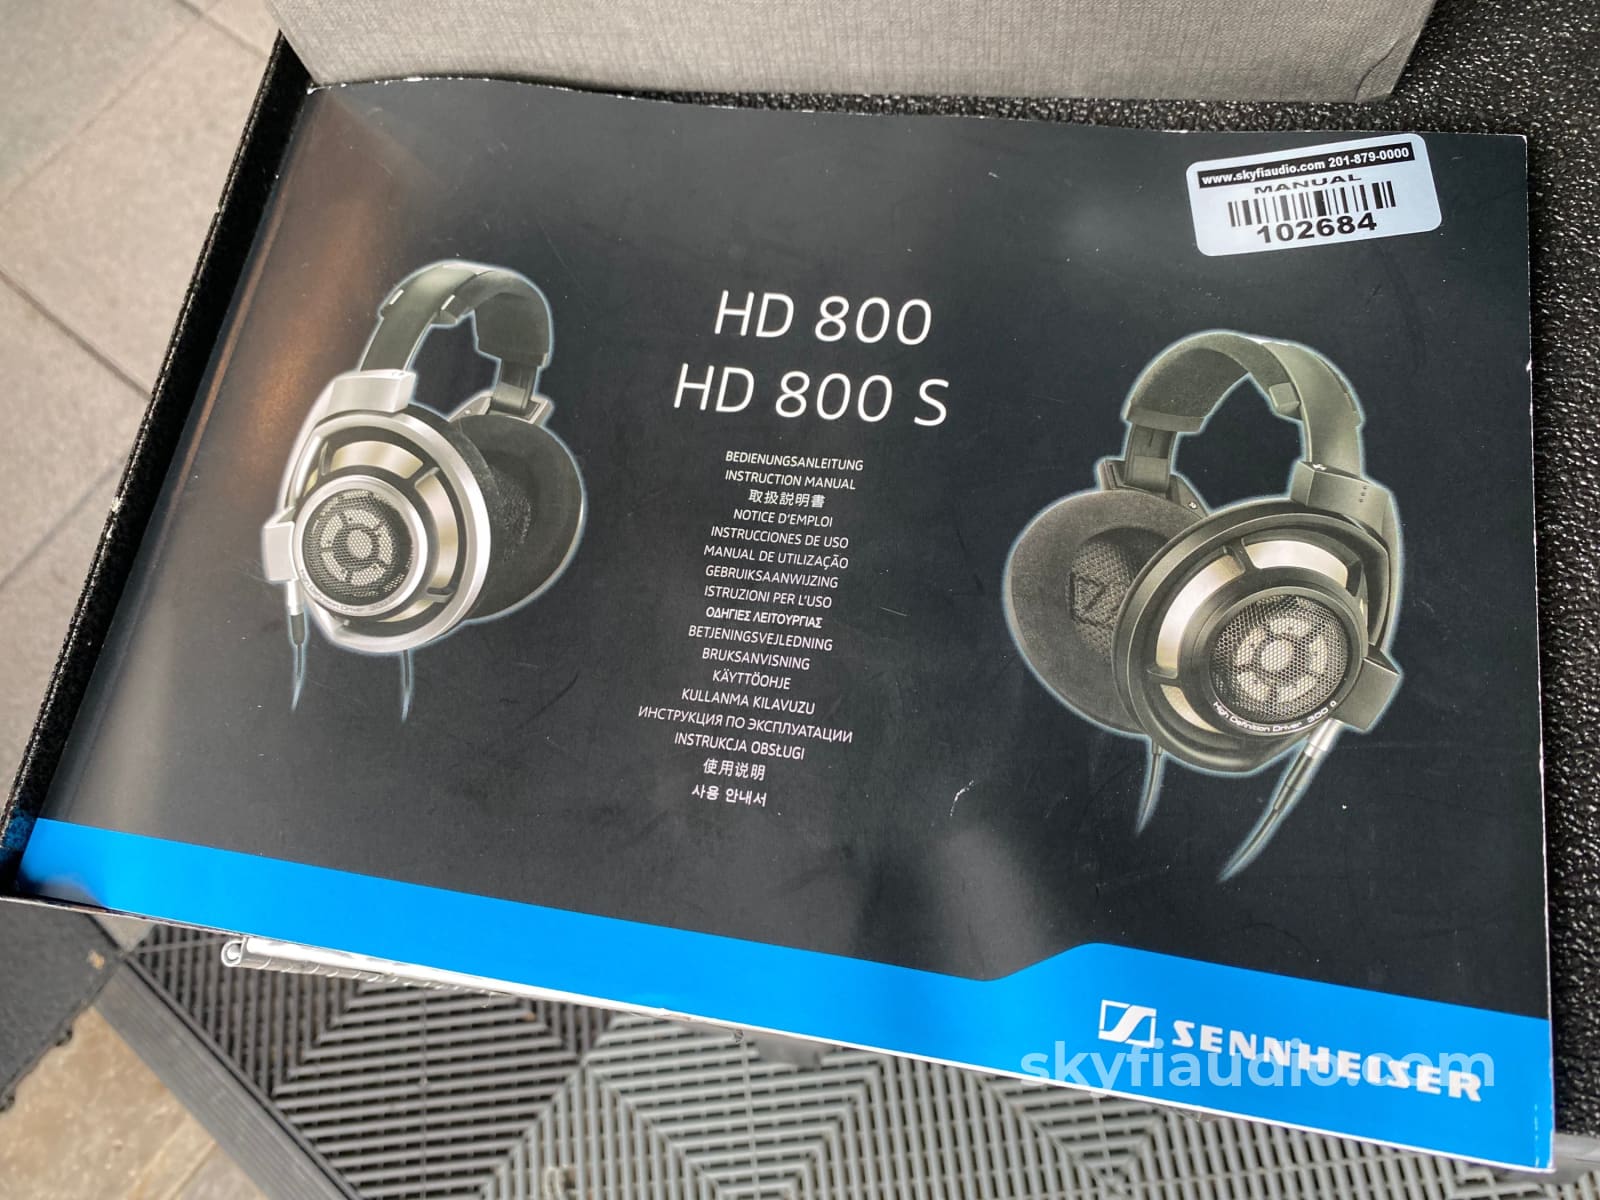 Sennheiser Hd800 Dynamic Reference Headphones - Super Clean Accessory